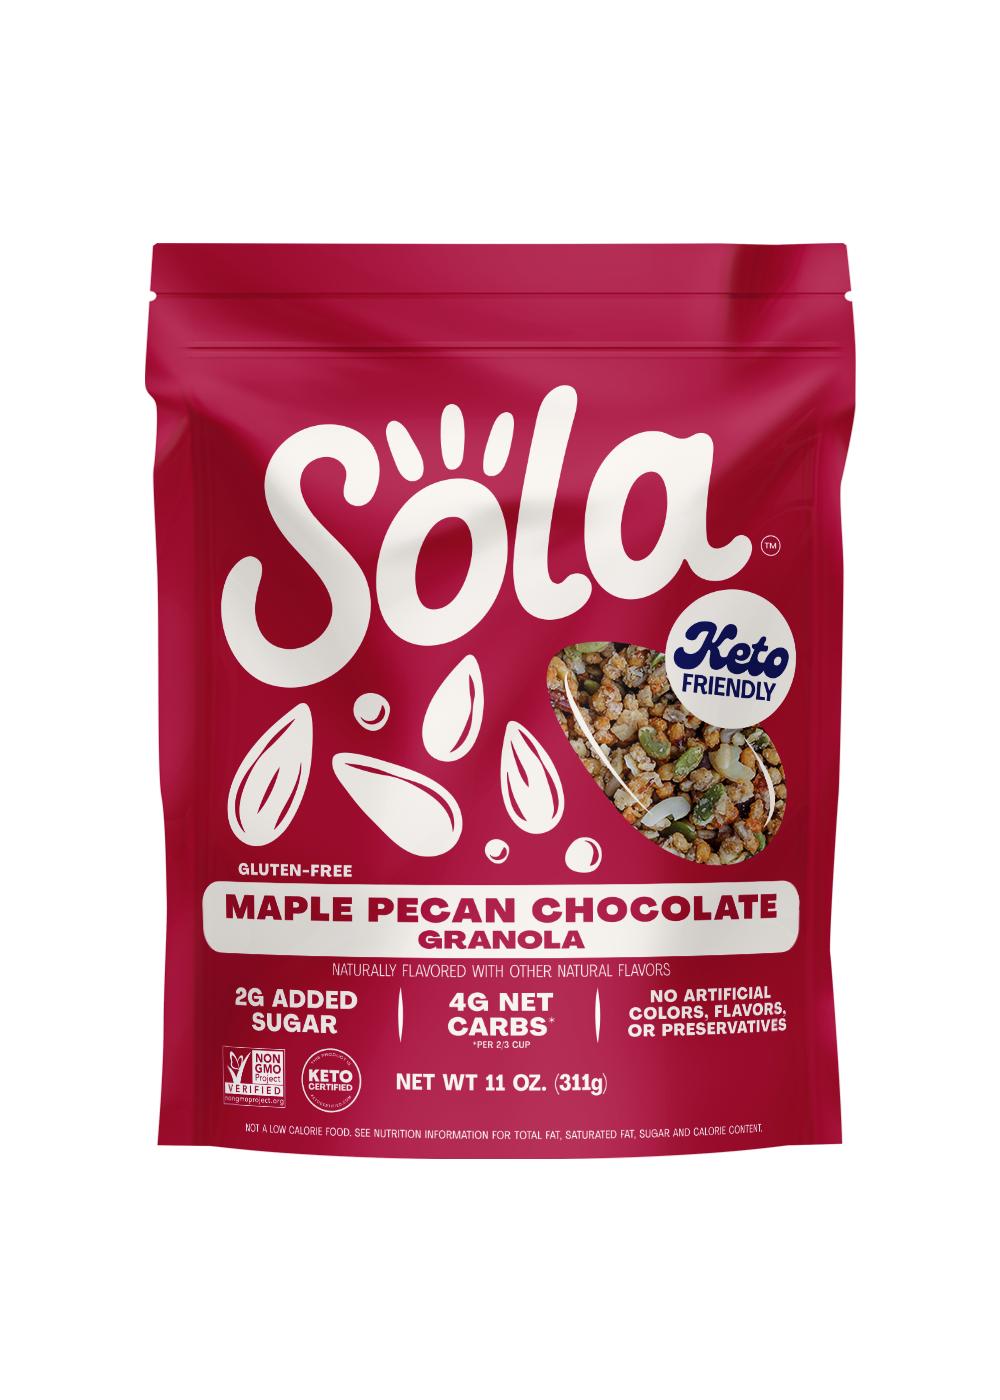 Sola 13g Protein Granola - Maple Pecan Chocolate; image 1 of 3